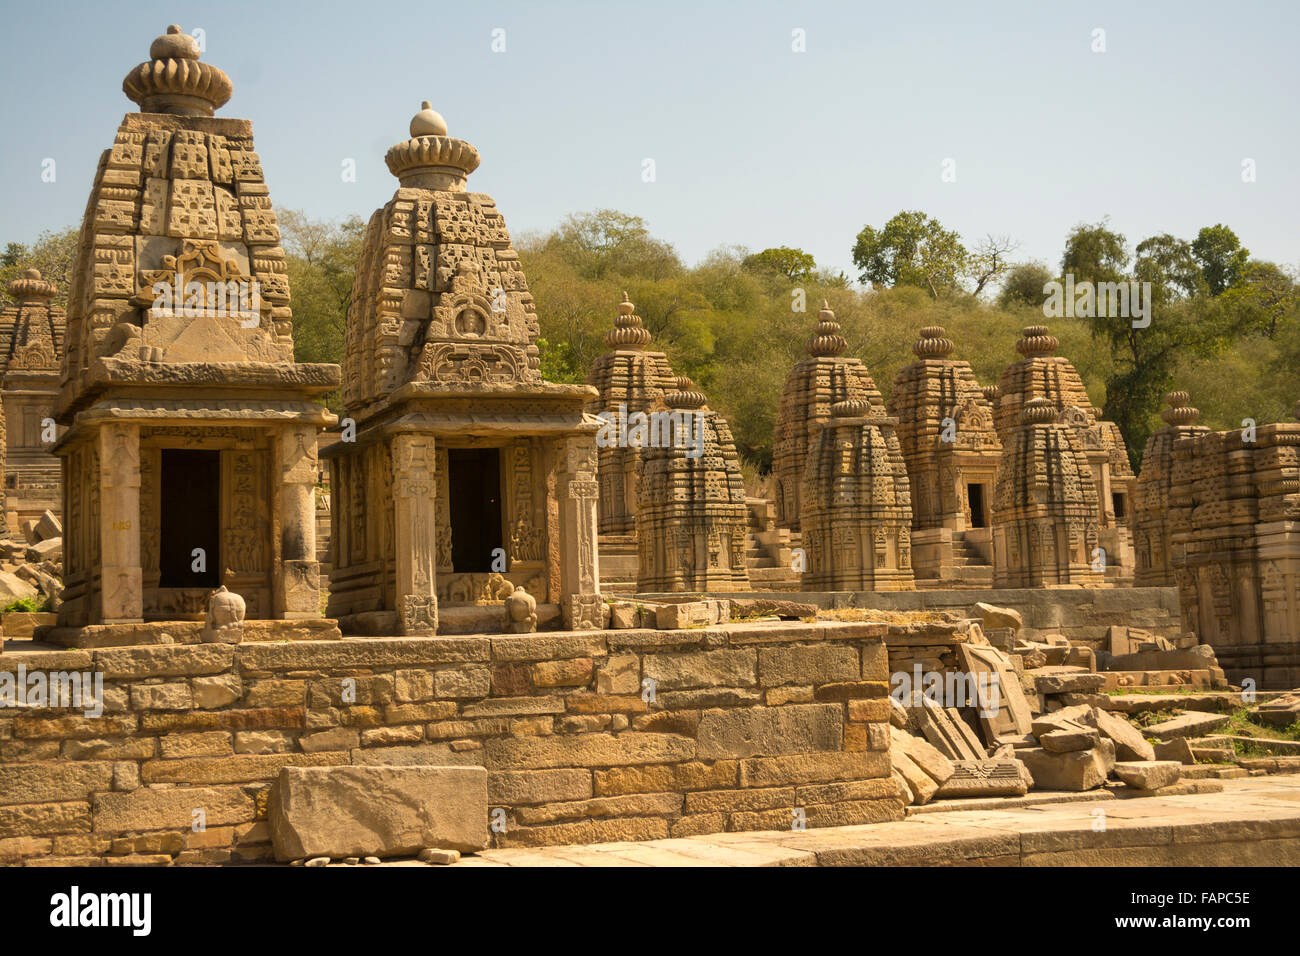 Bateshwar temple ruins Madhya pradesh India Stock Photo